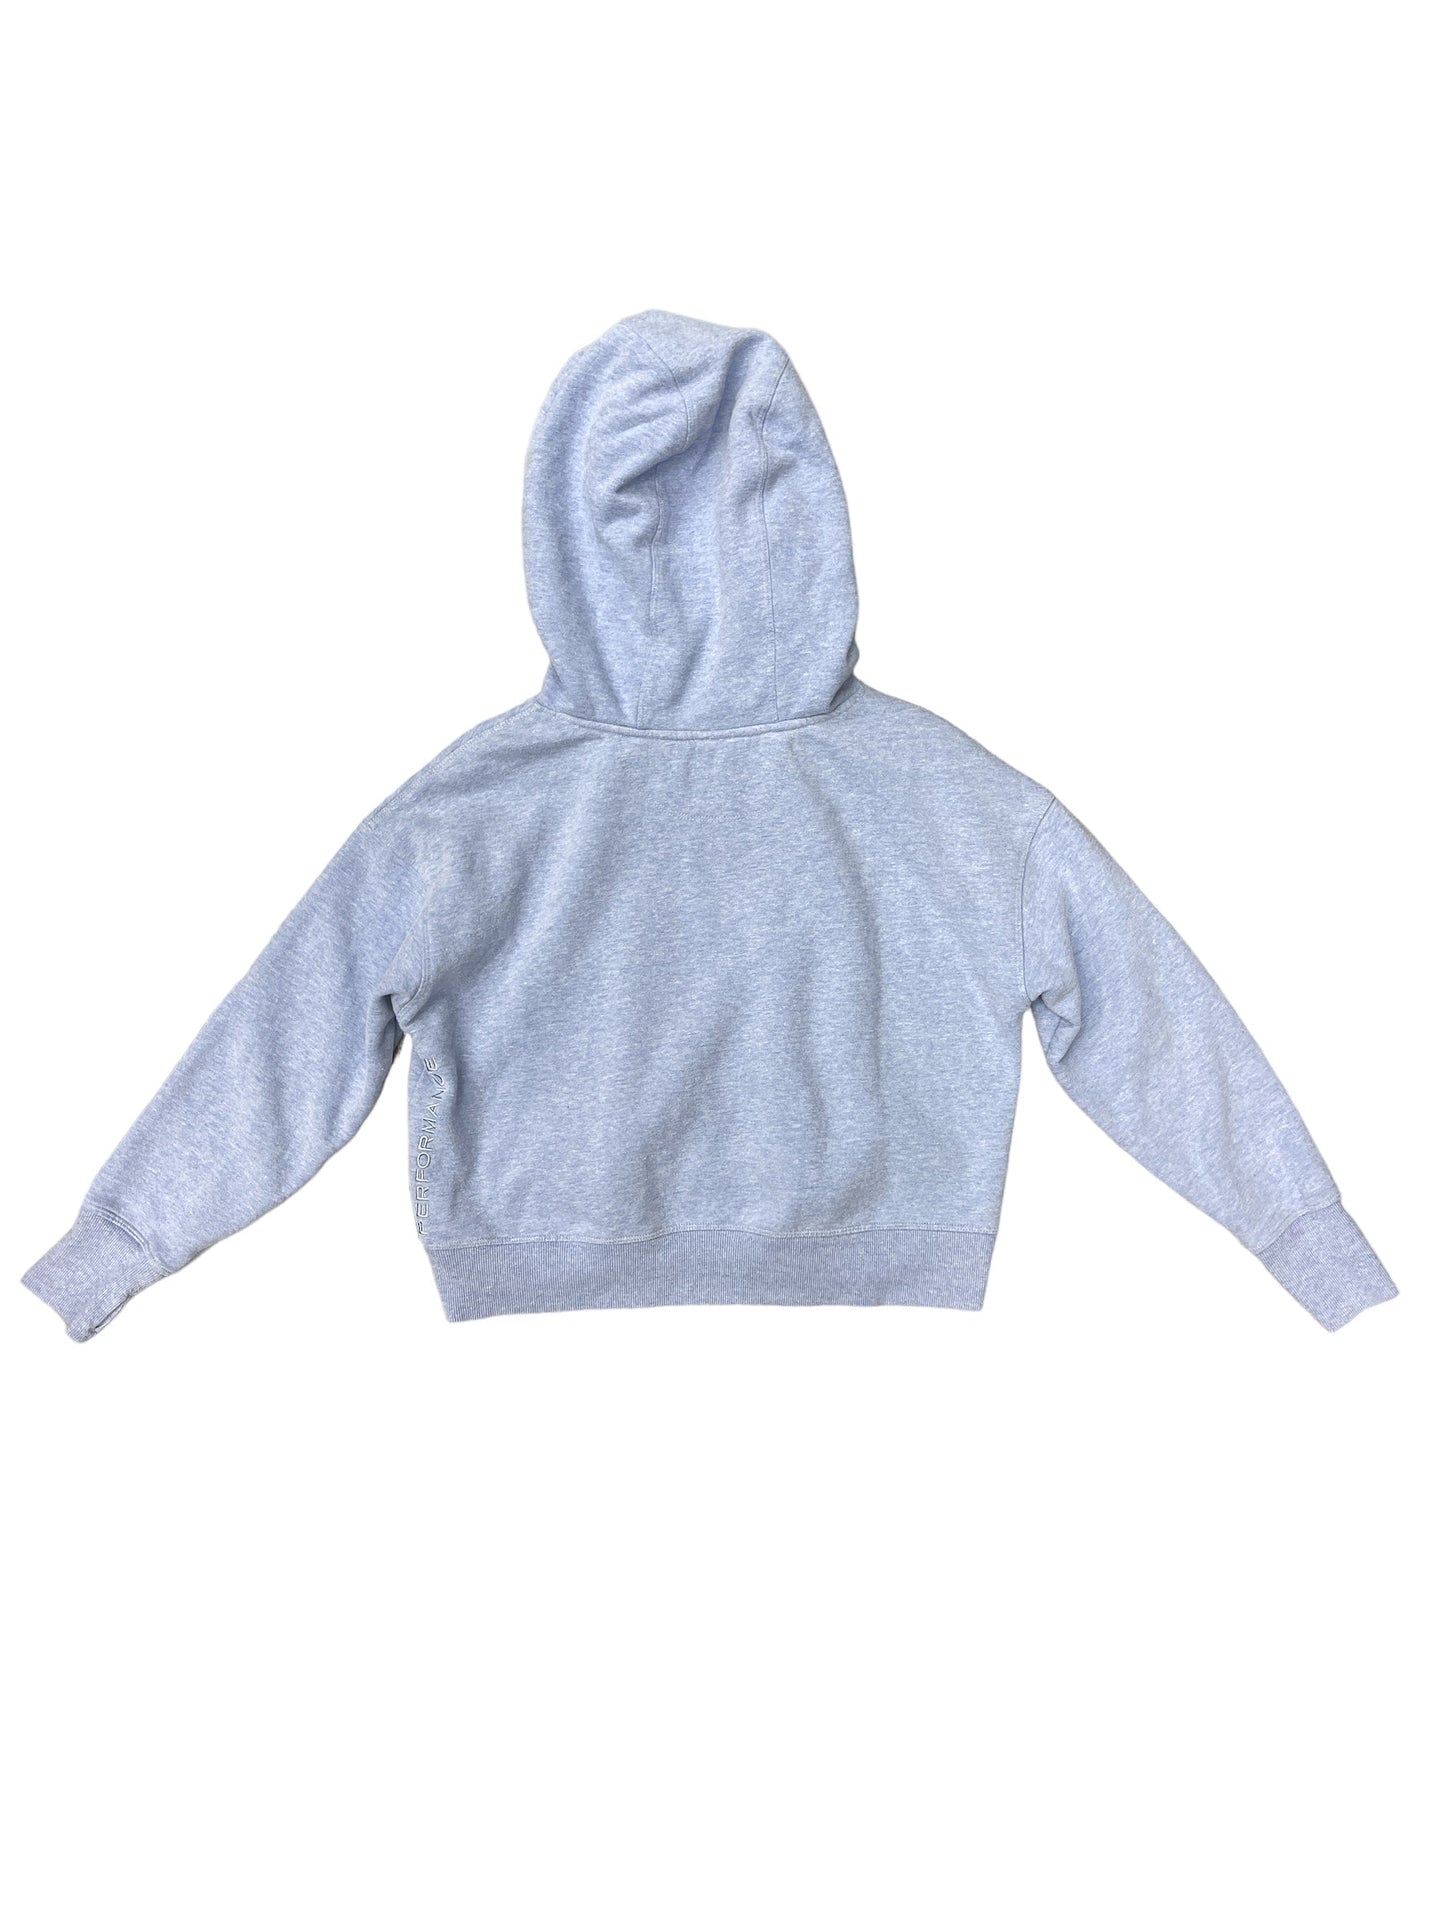 Sweatshirt Hoodie By Calvin Klein  Size: S